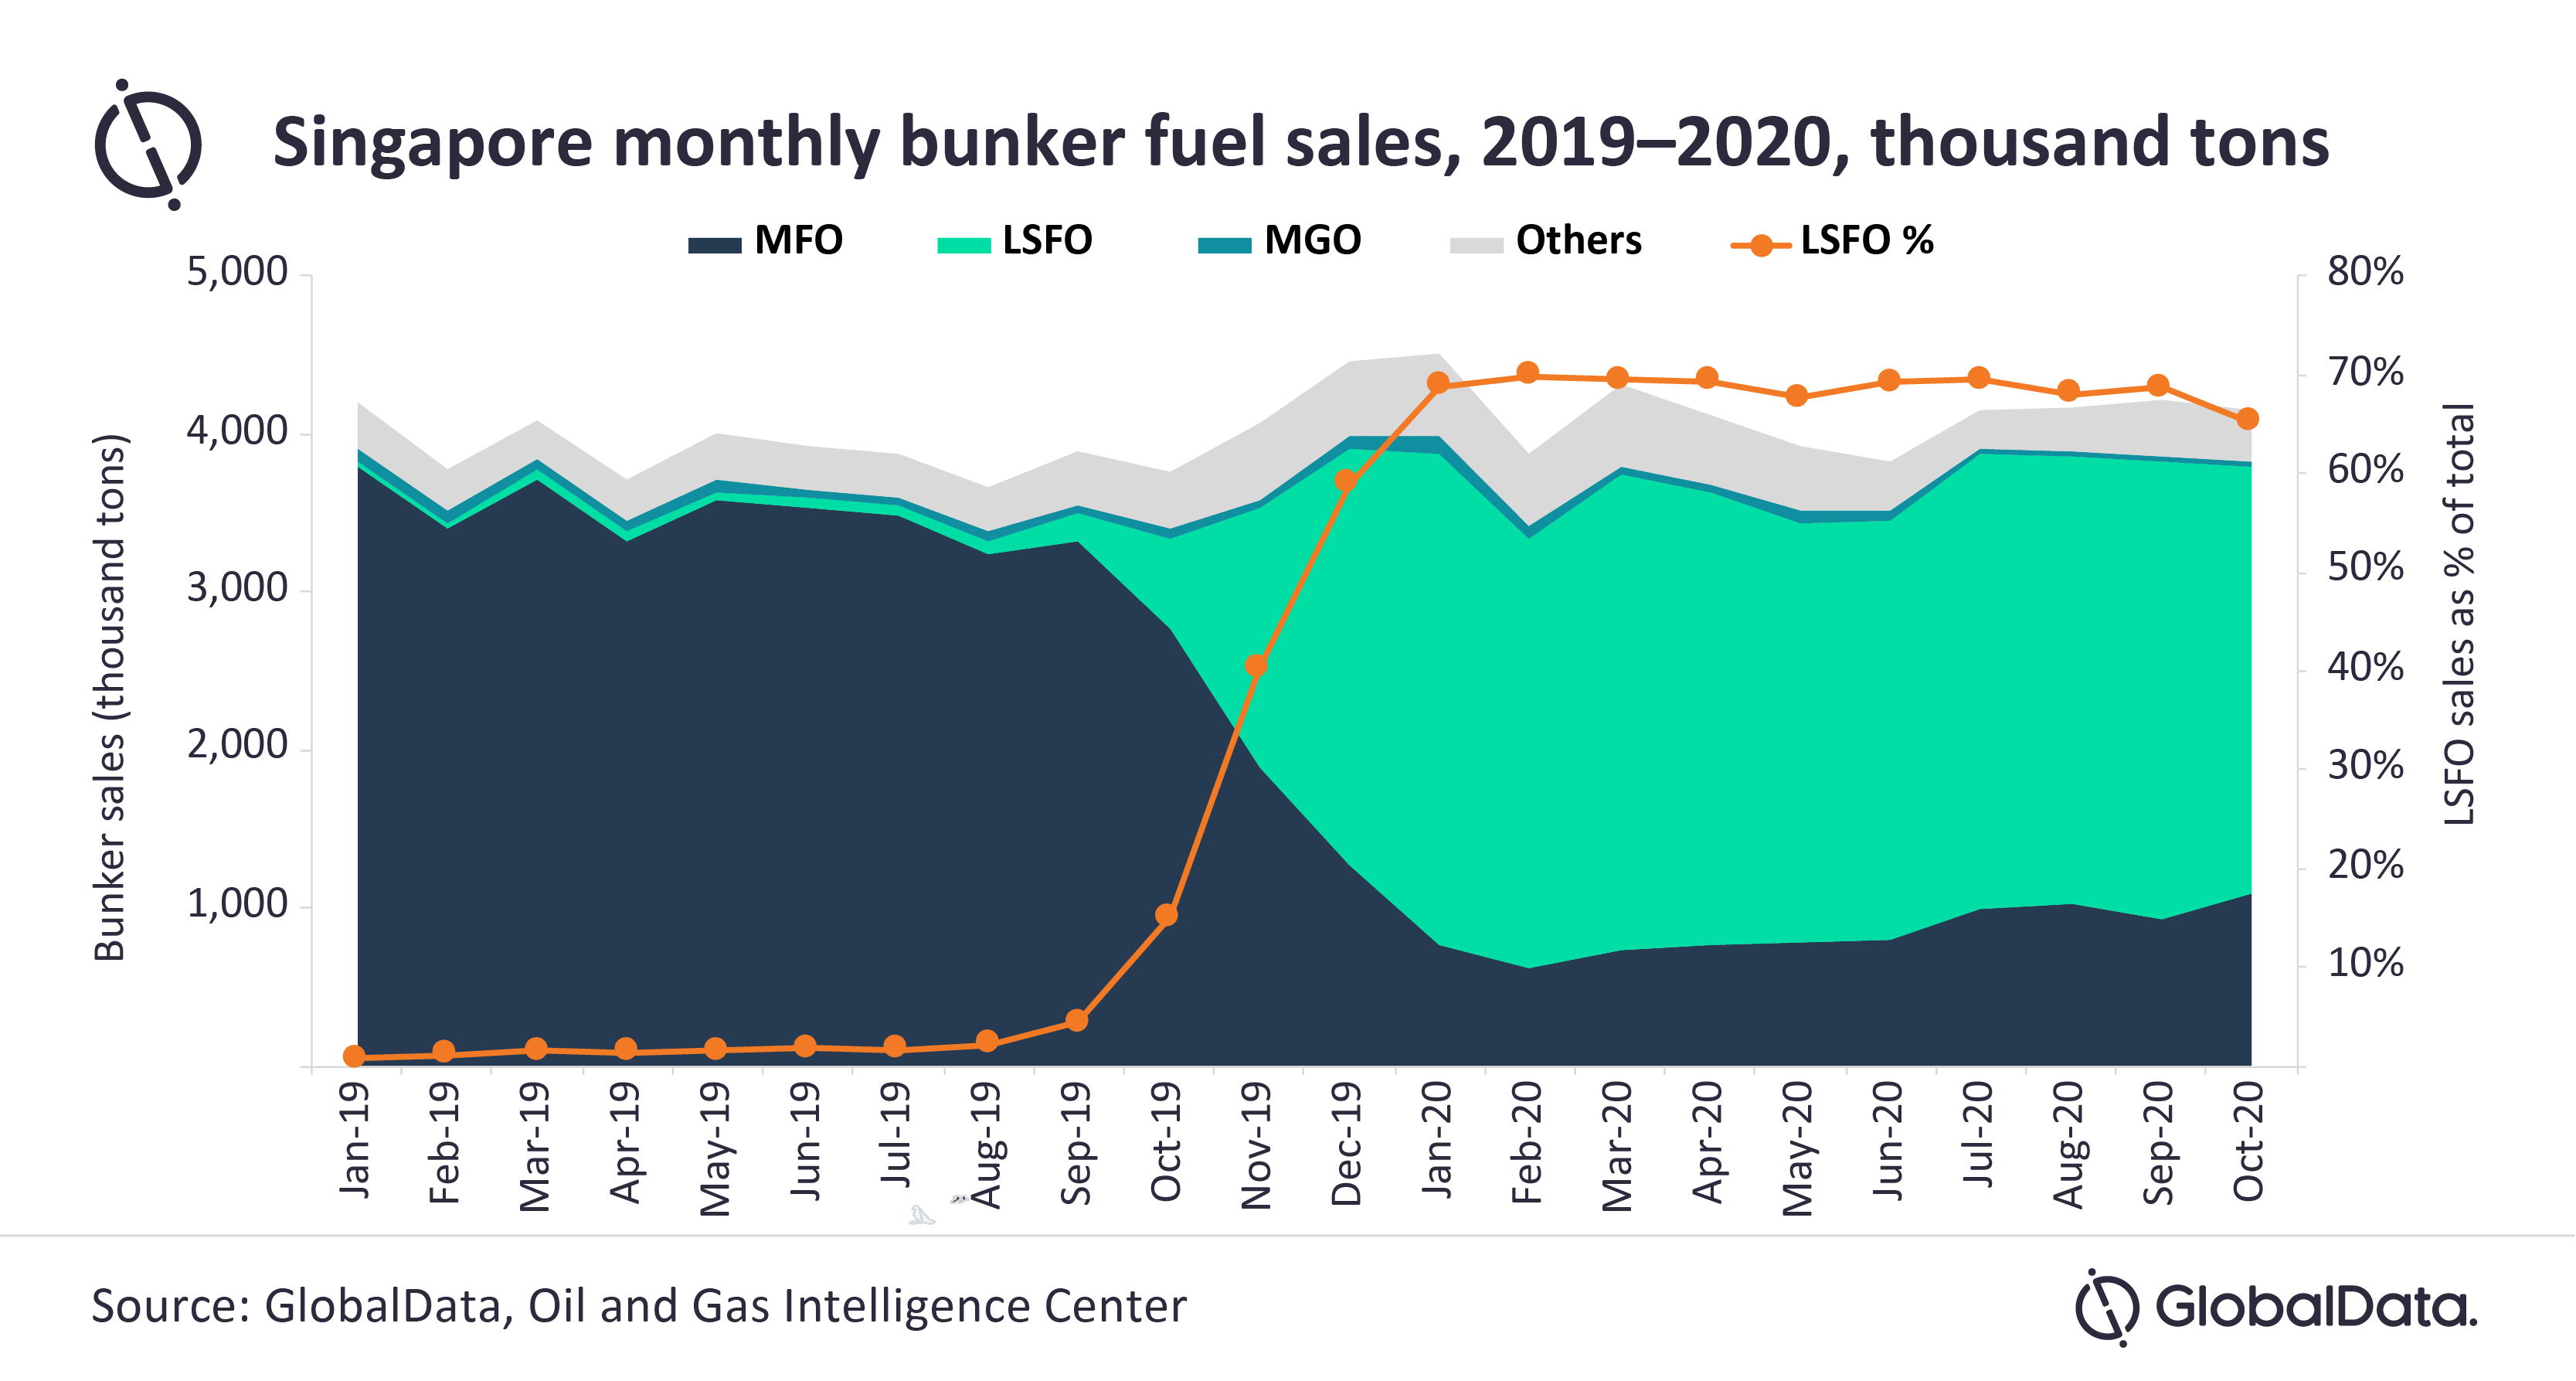 LSFO emerging as preferred bunker fuel following IMO 2020